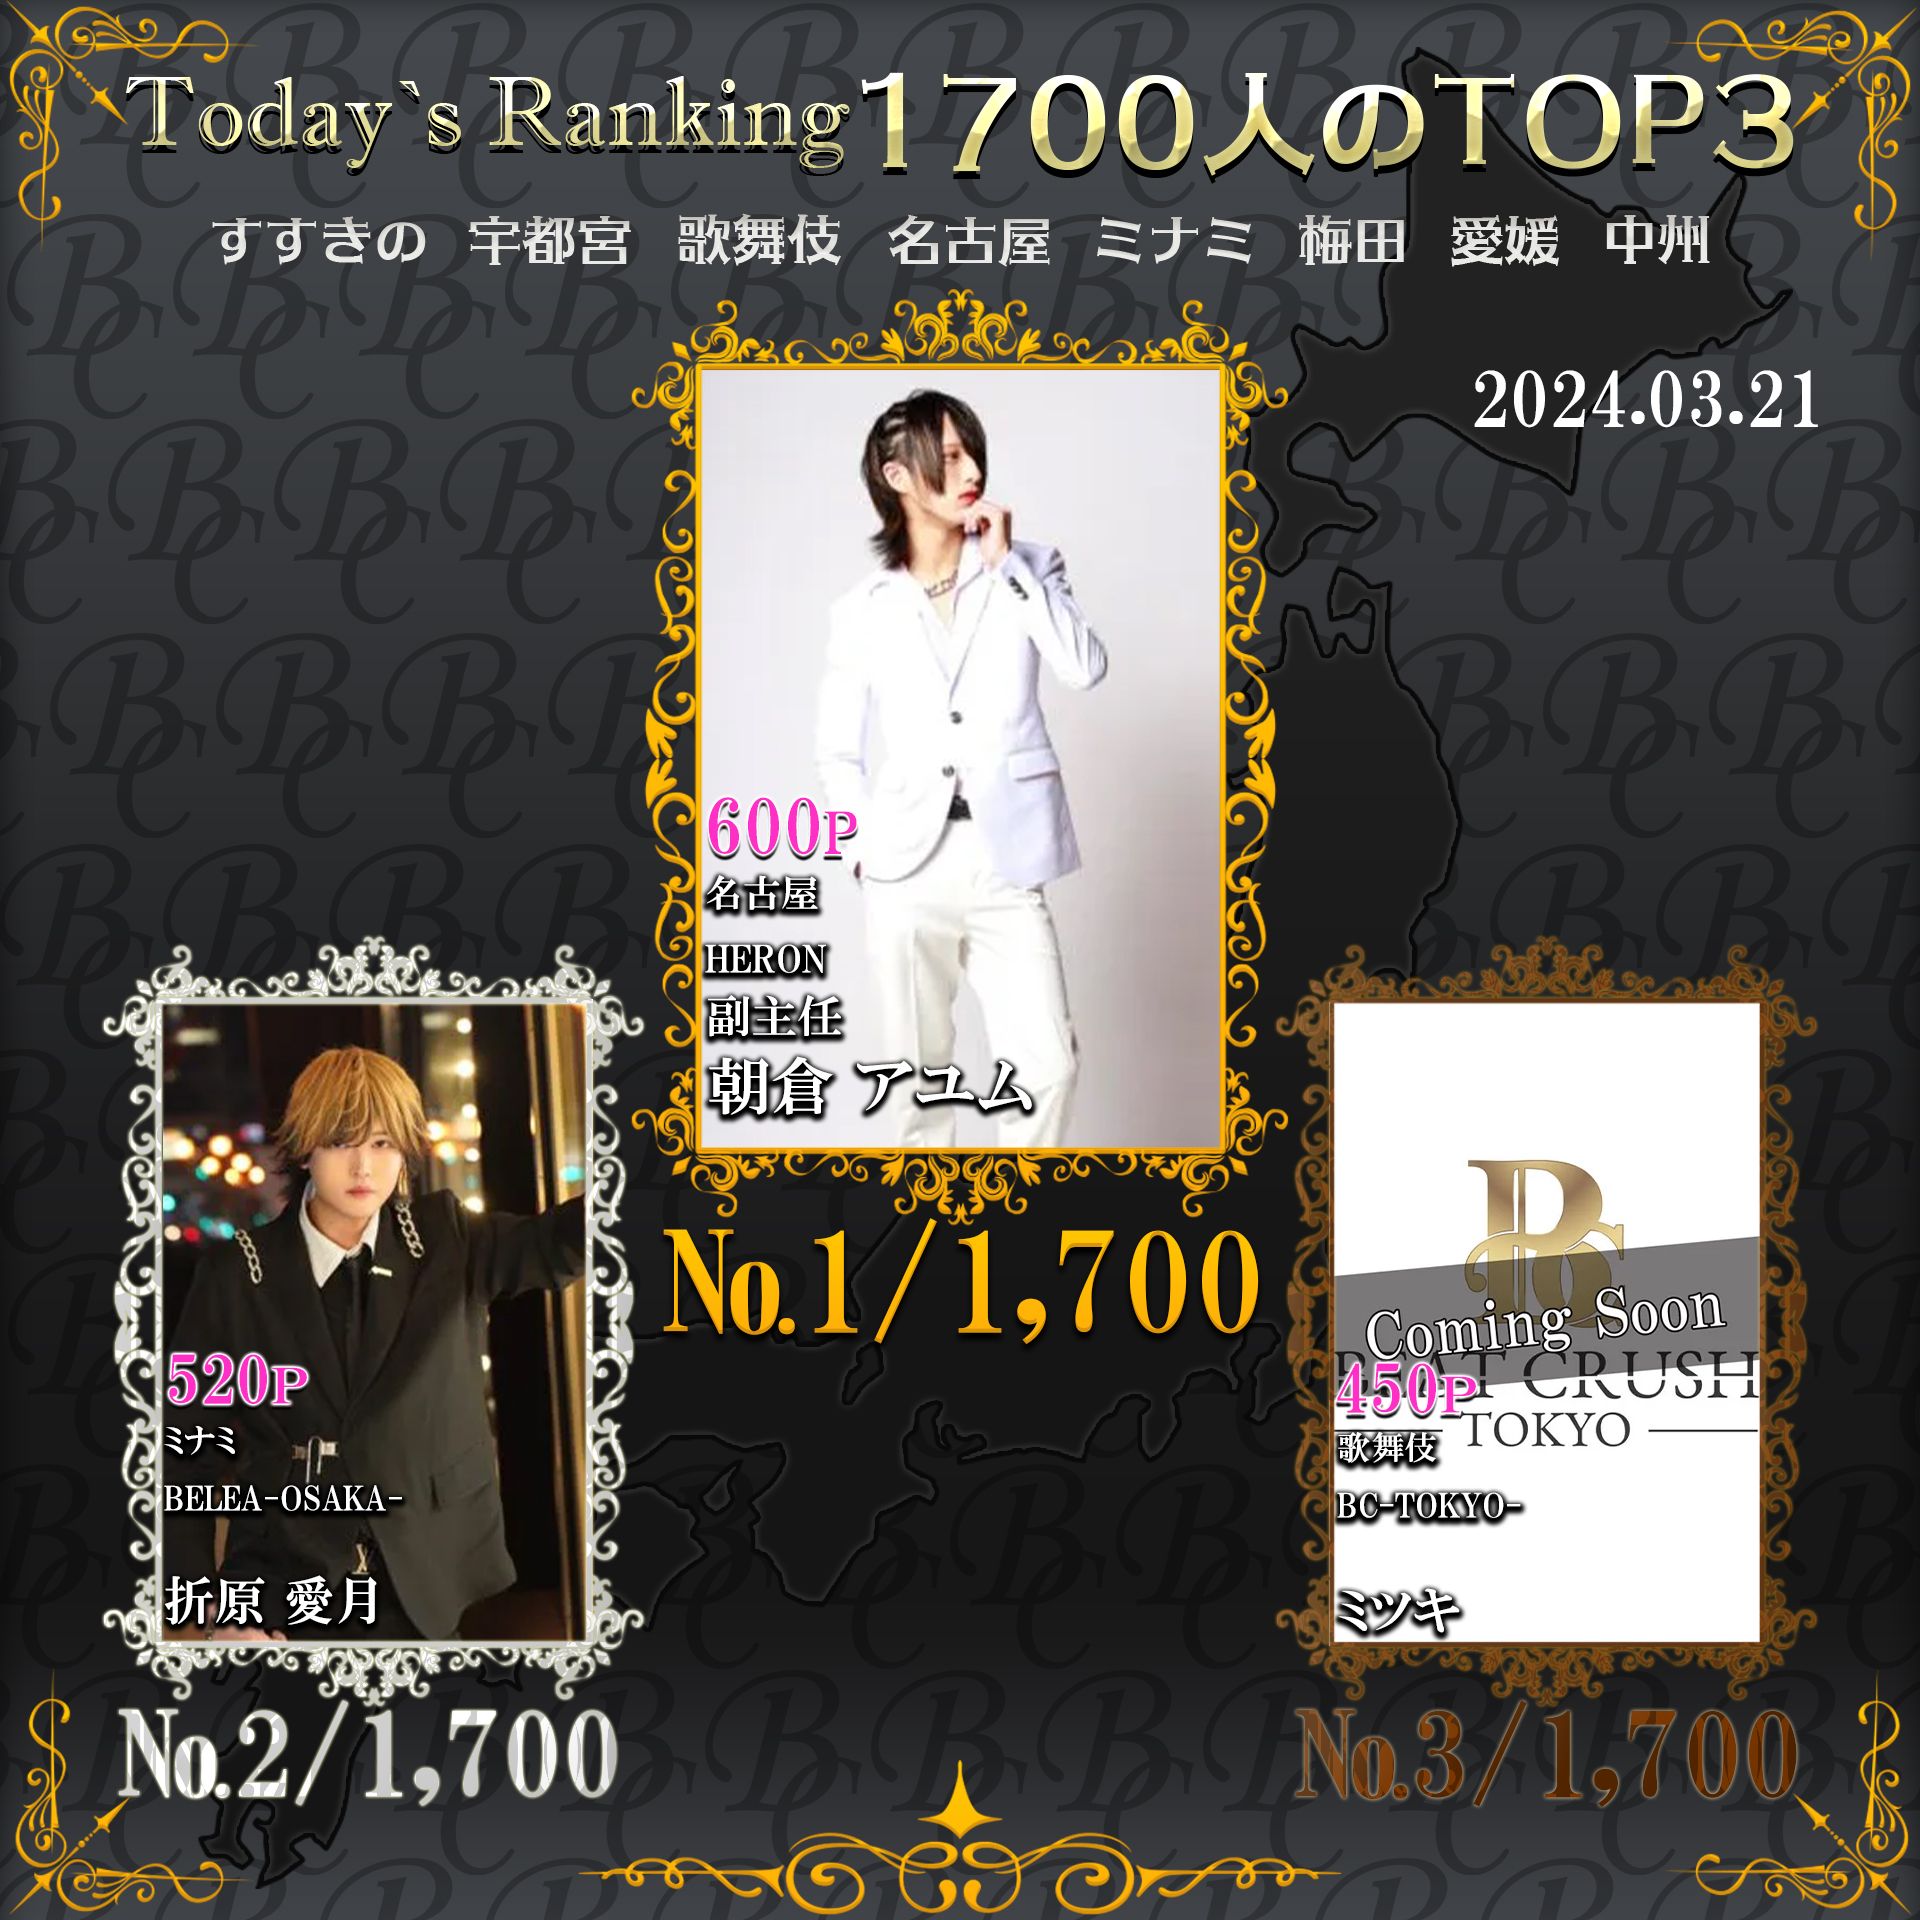 3/21 Today’s Ranking